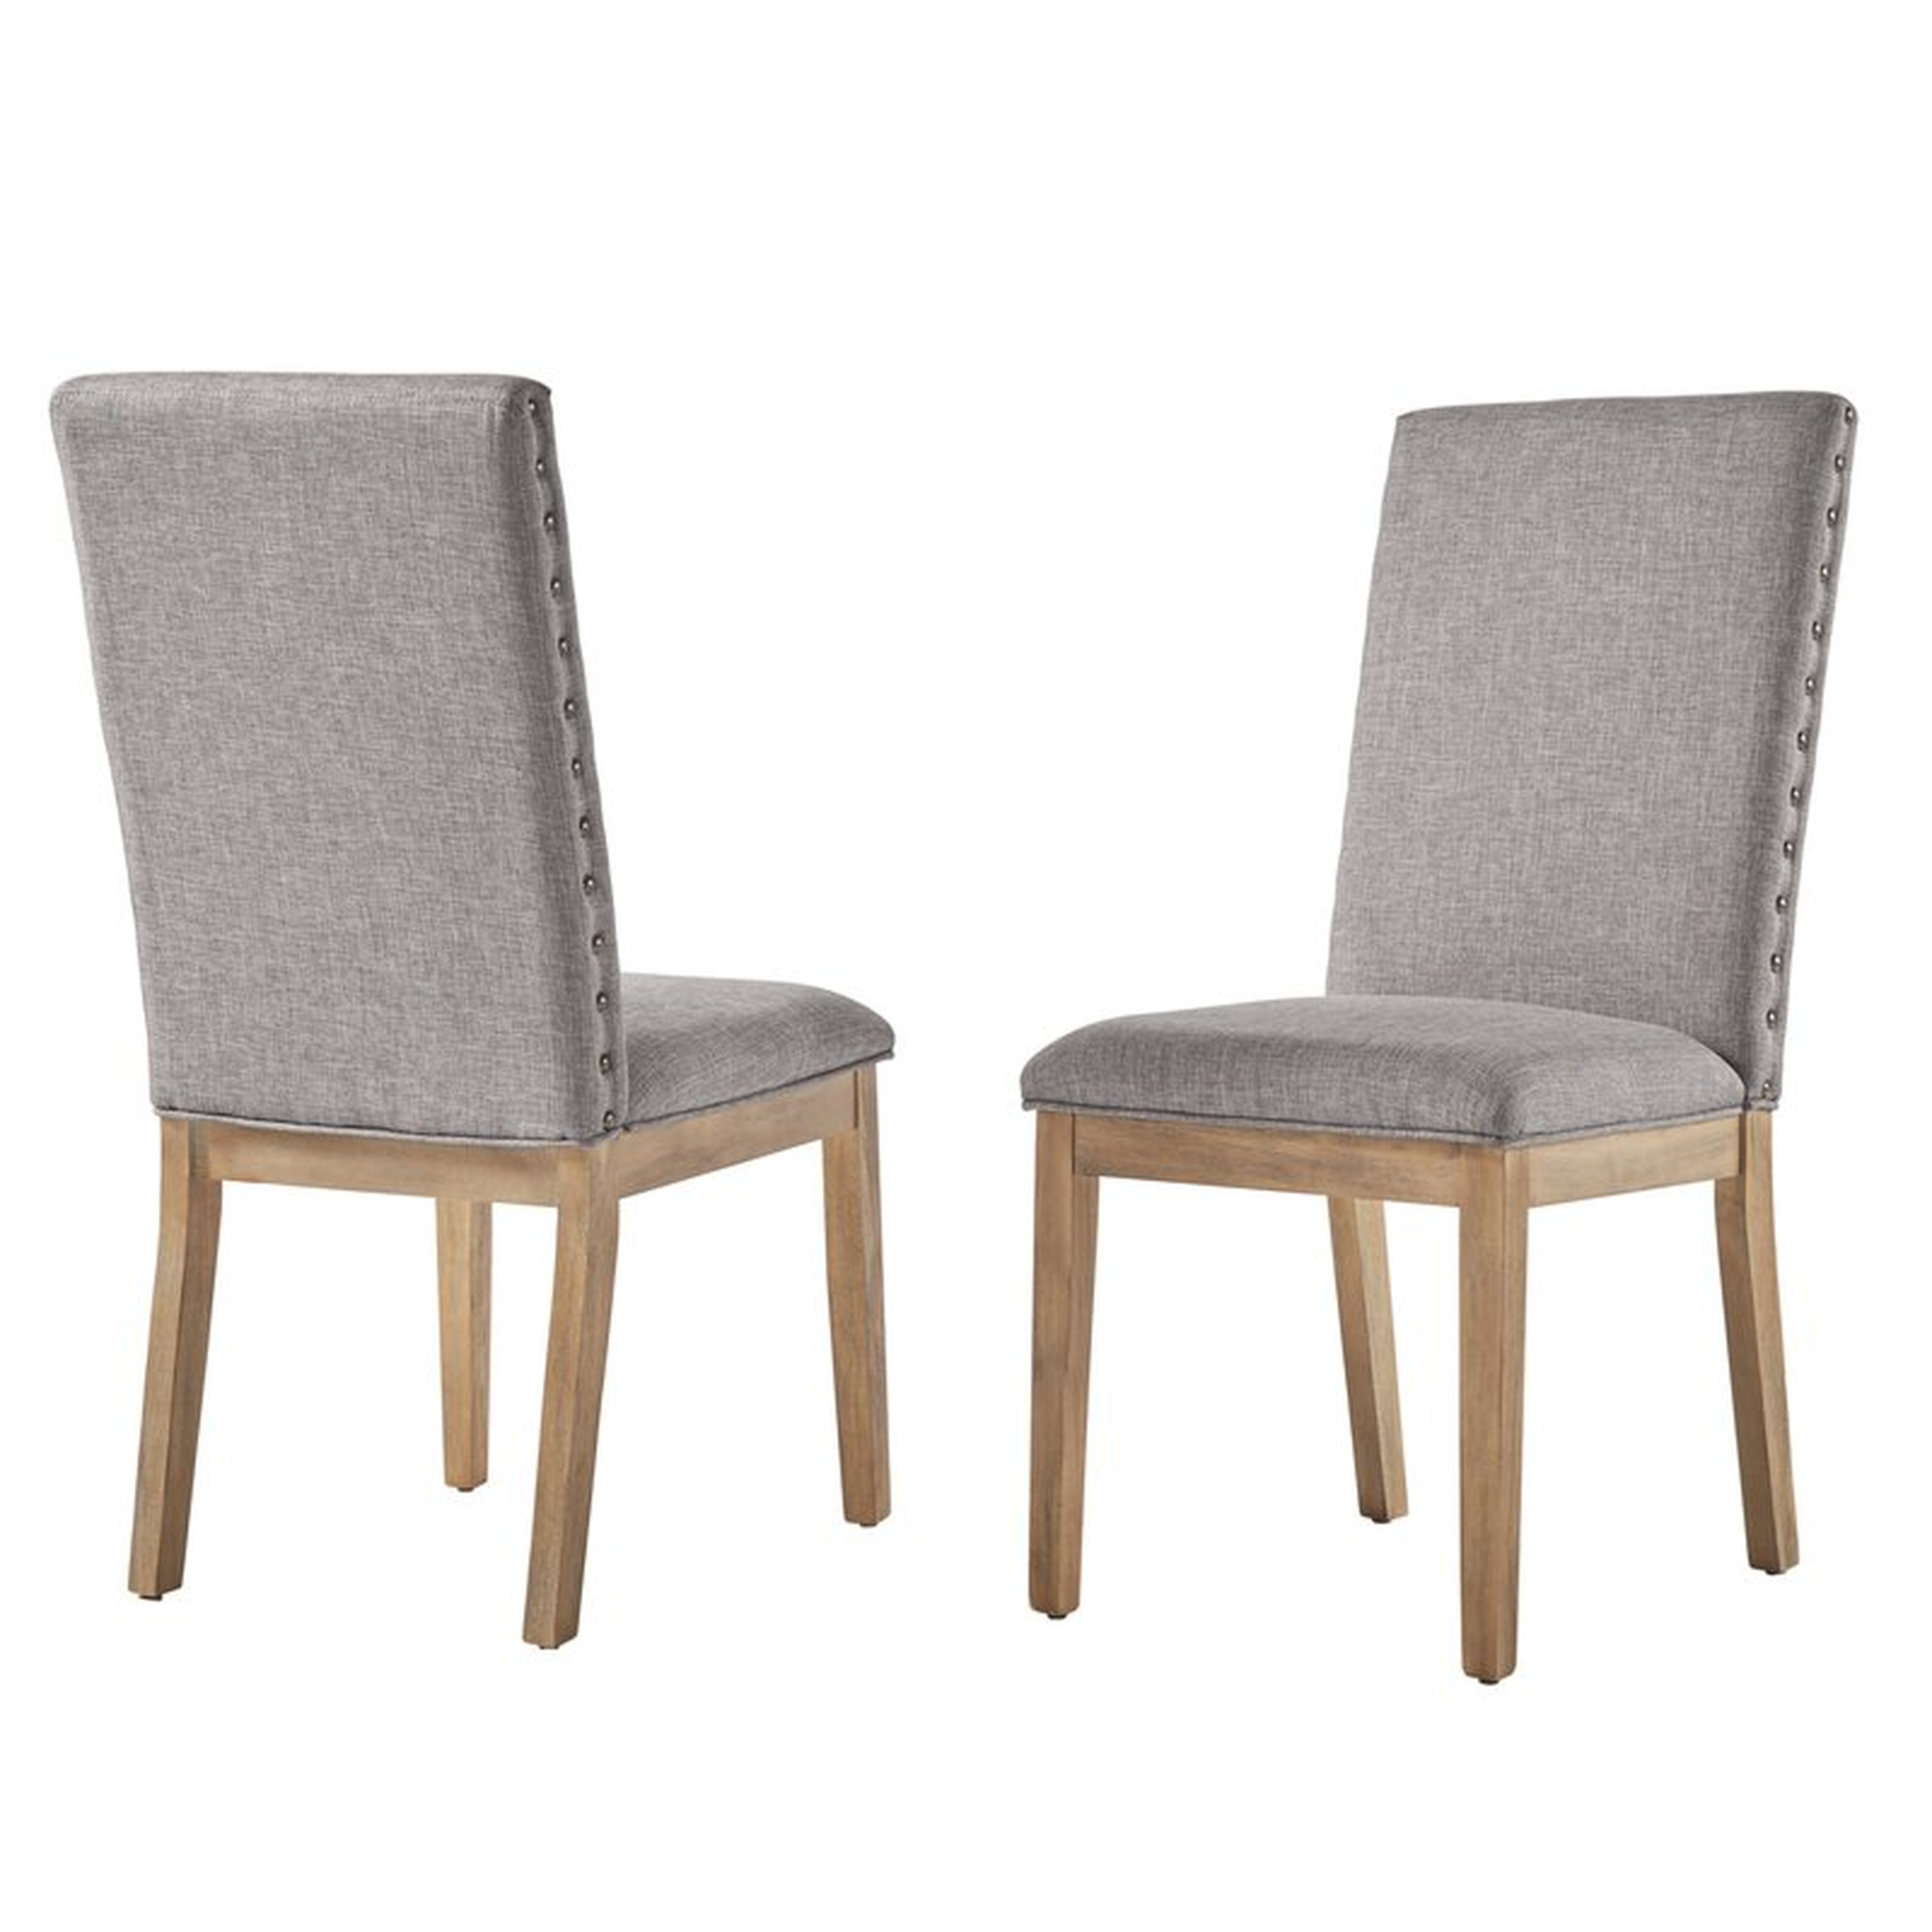 Wyman Upholstered Dining Chair (Set of 2) - Birch Lane